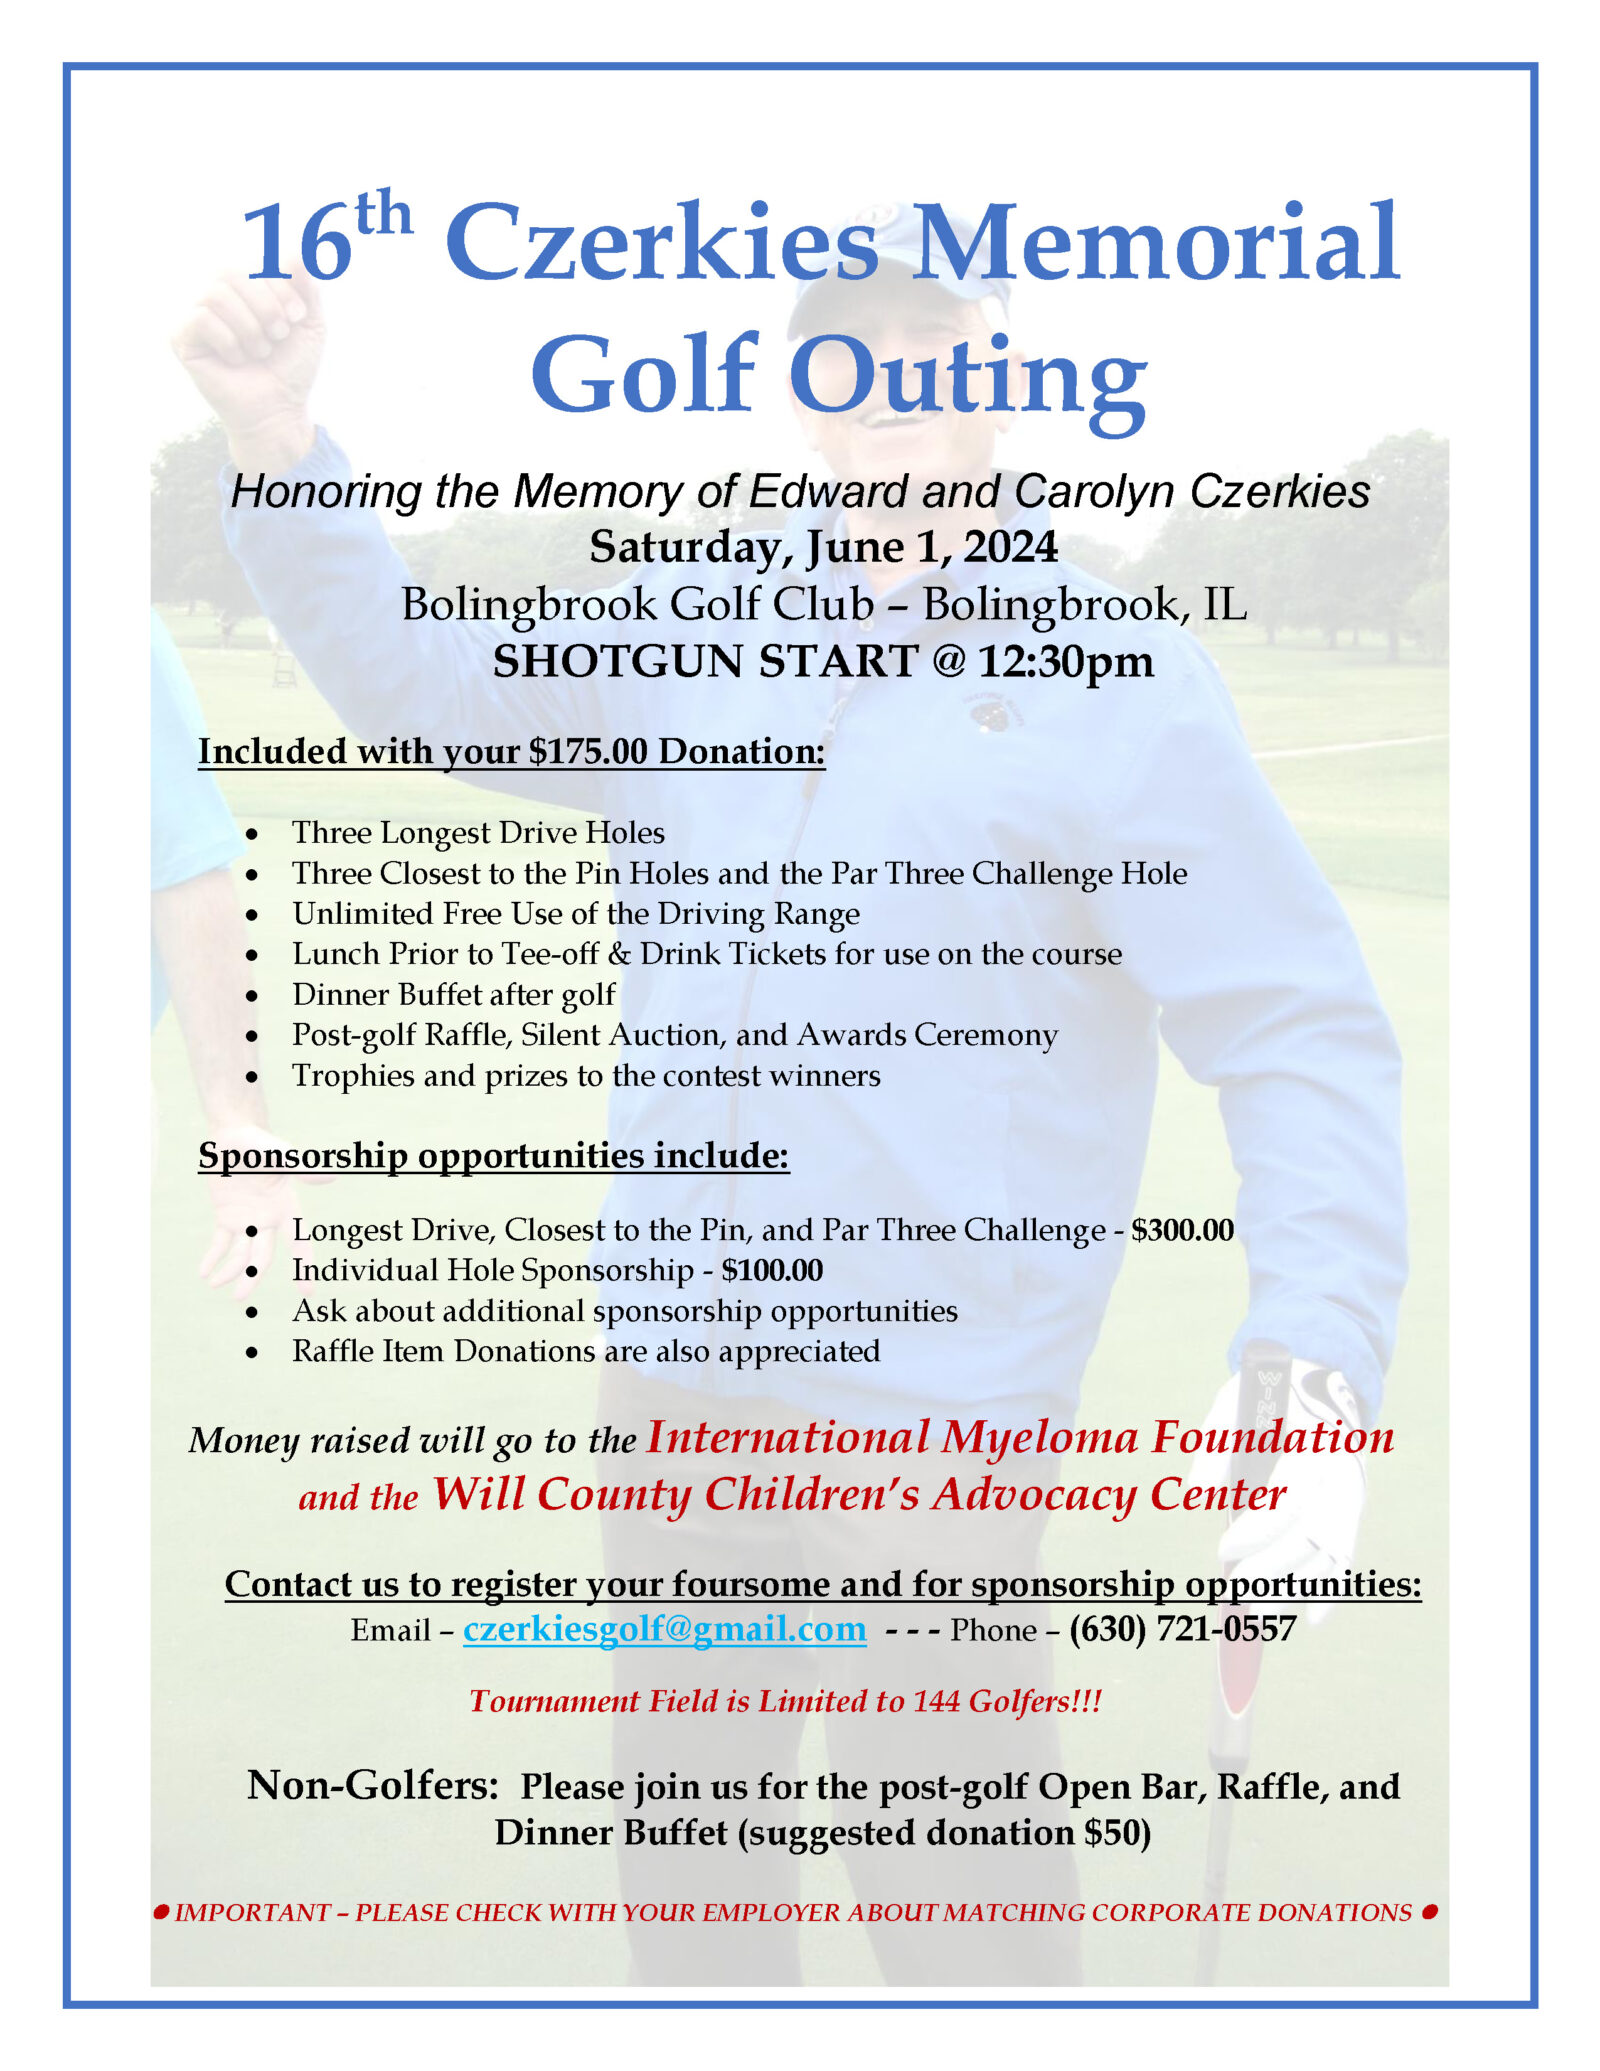 16th Annual Czerkies Memorial Golf Outing 2024